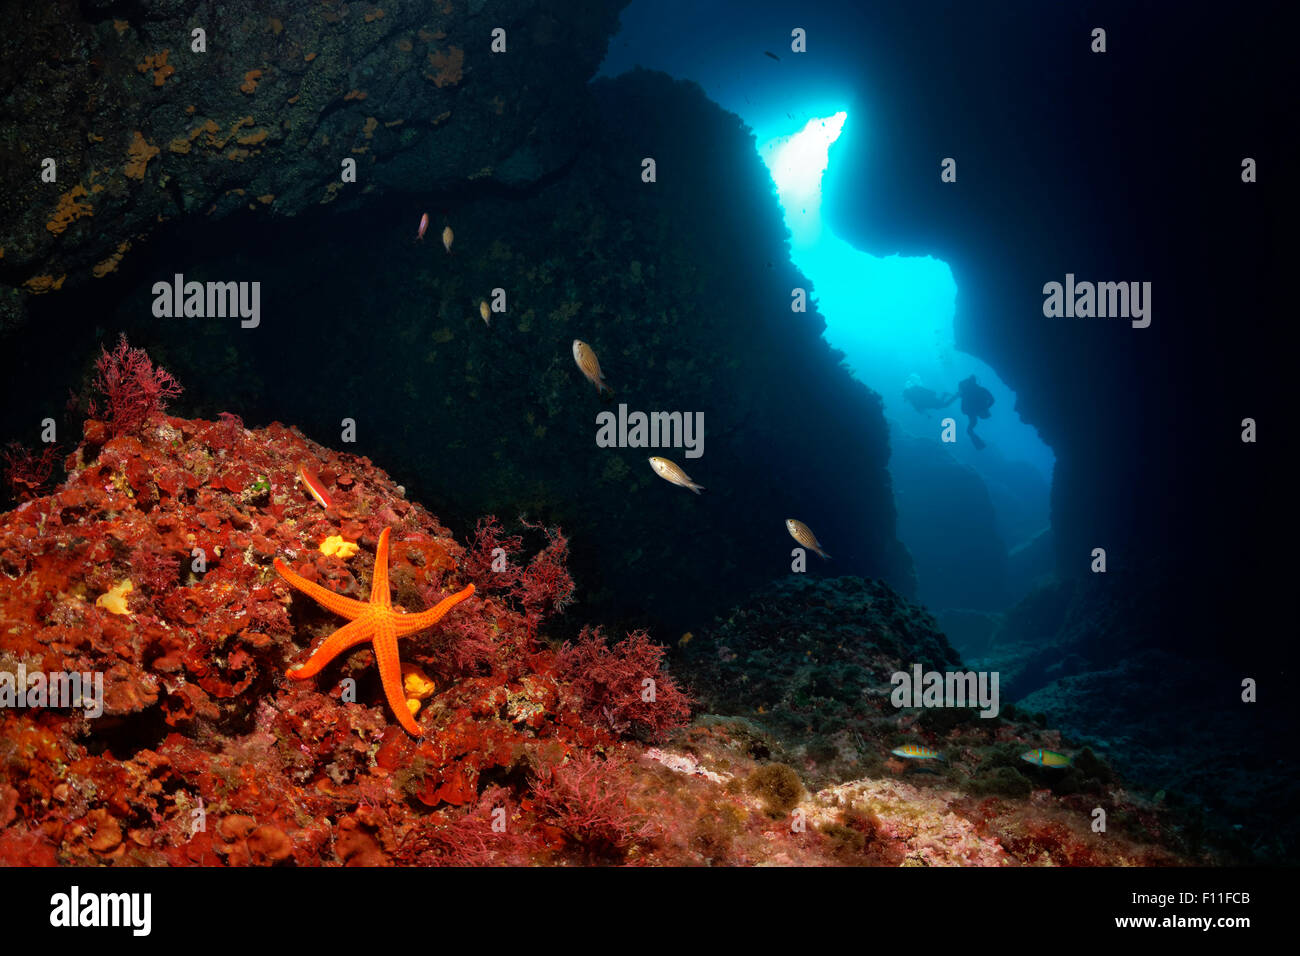 Two divers in a cave entrance, Amphiroa rigida, damselfish (Chromis chromis), red starfish (Hacelia attenuata), Corfu Stock Photo